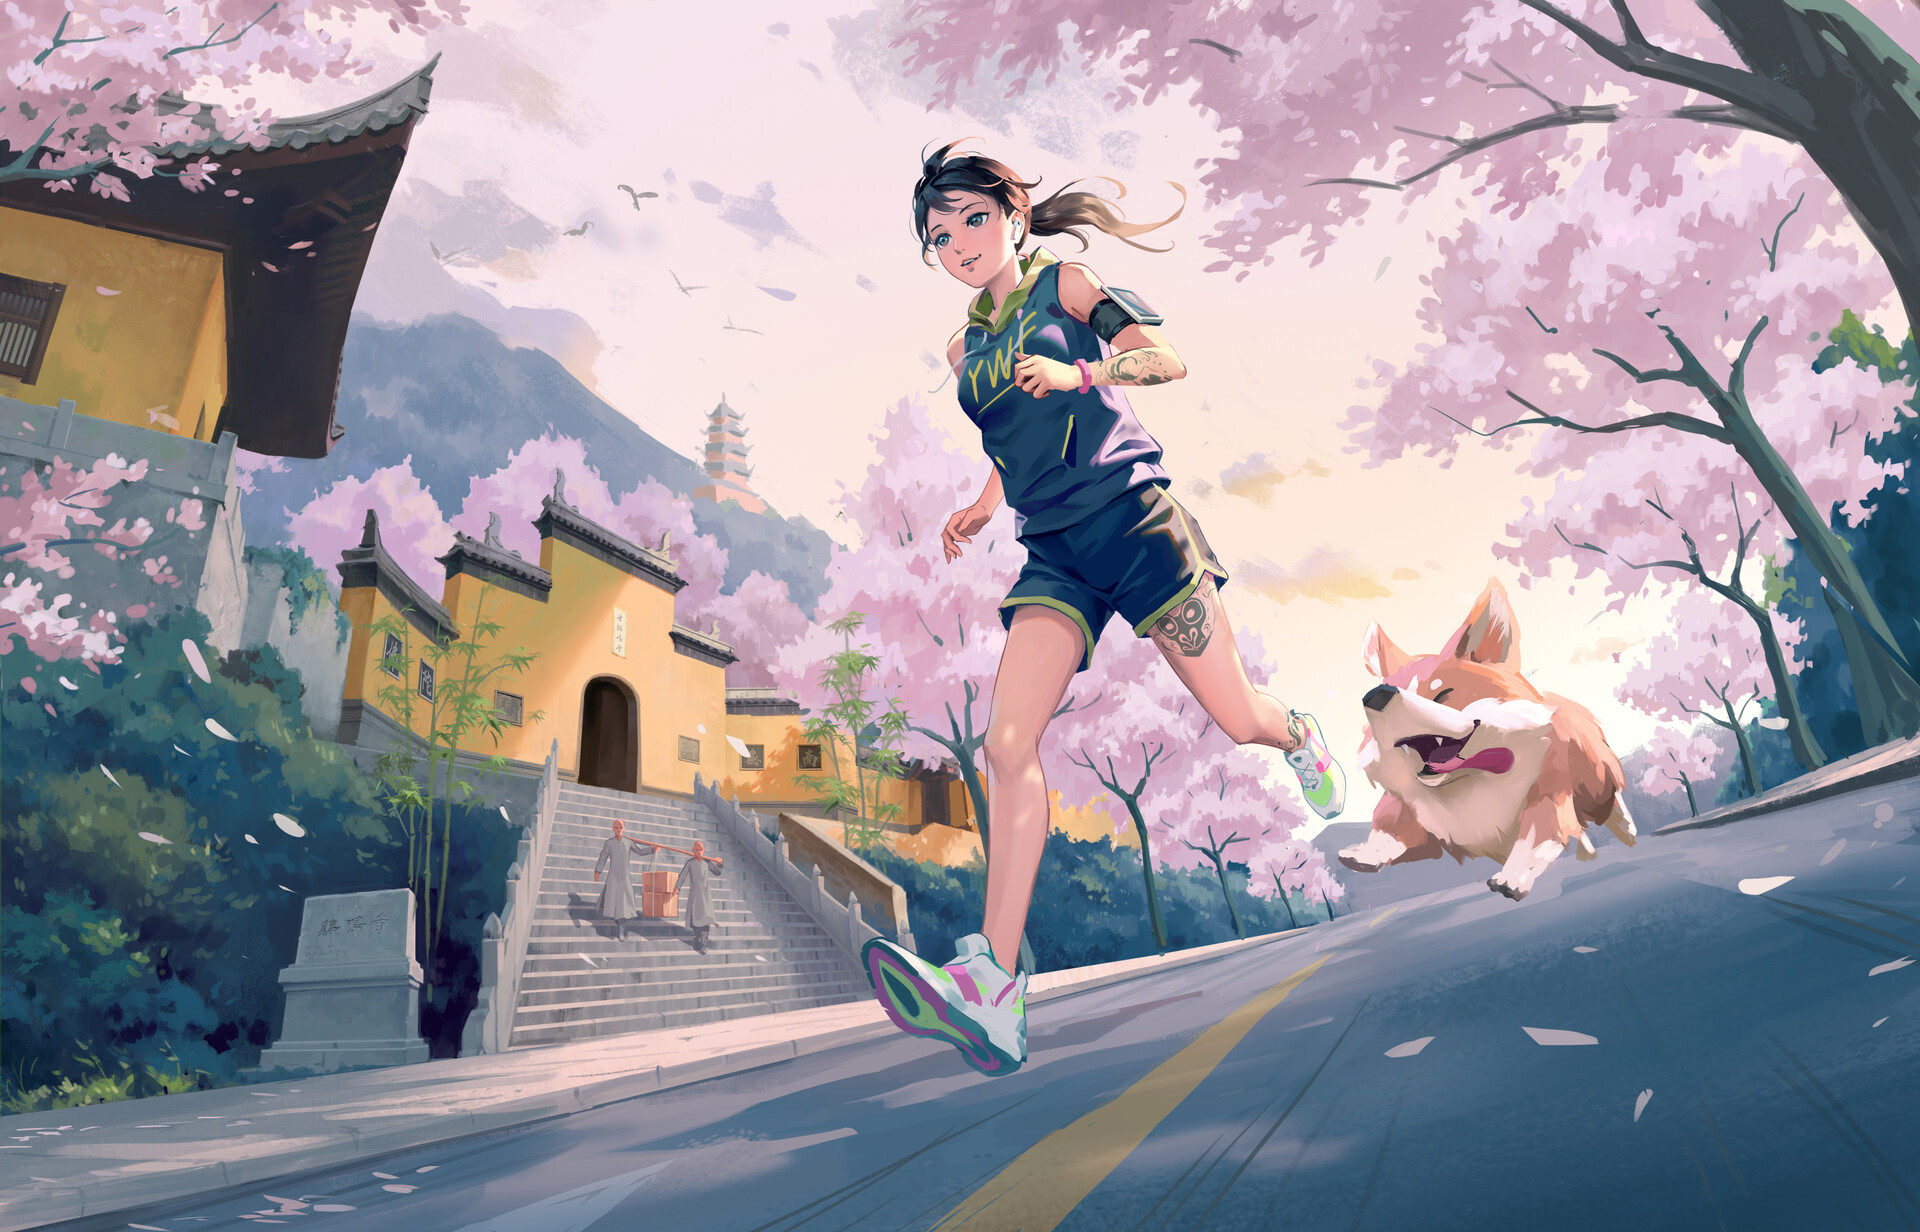 Anime 1920x1232 Wenfei Ye drawing anime girls brunette ponytail dog Corgi happy running jogging cherry blossom temple women stairs street Chinese architecture